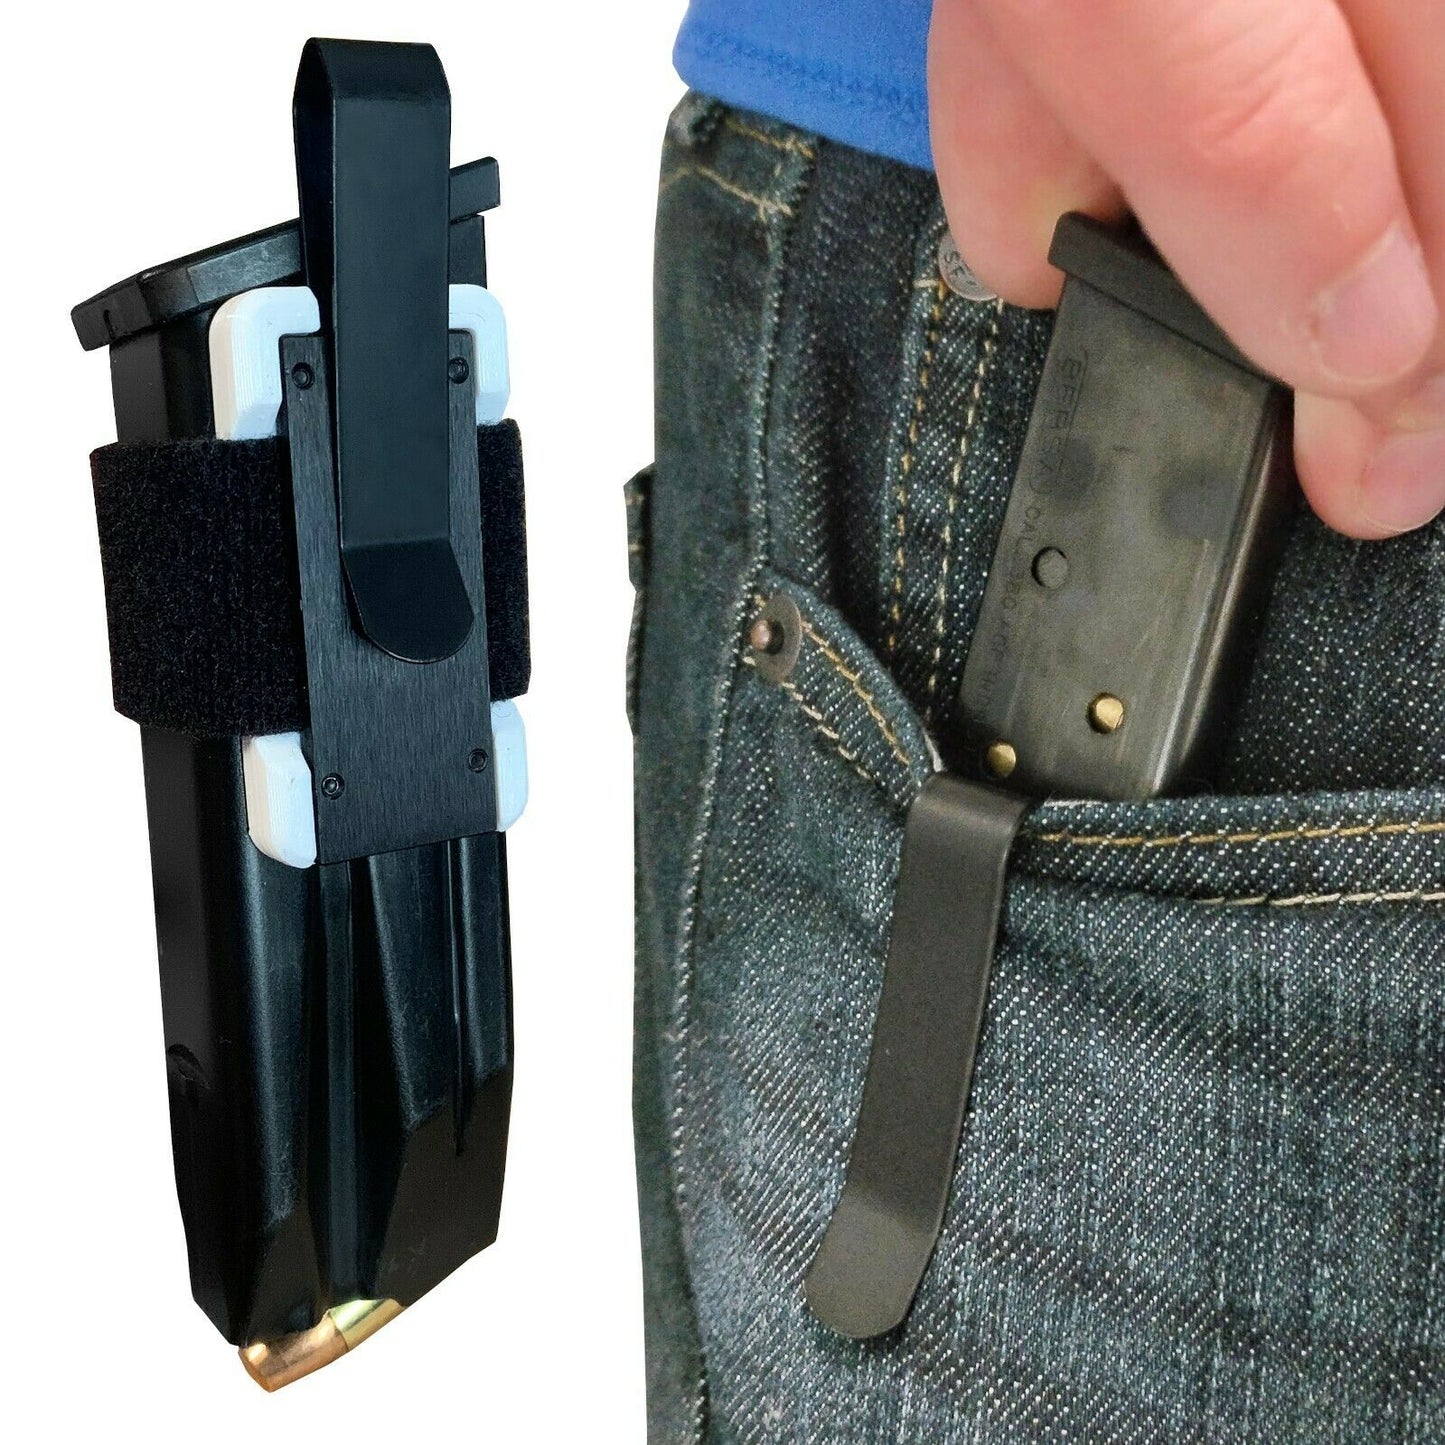 Universal Pocket Mag Holder, RipCord™ ONE